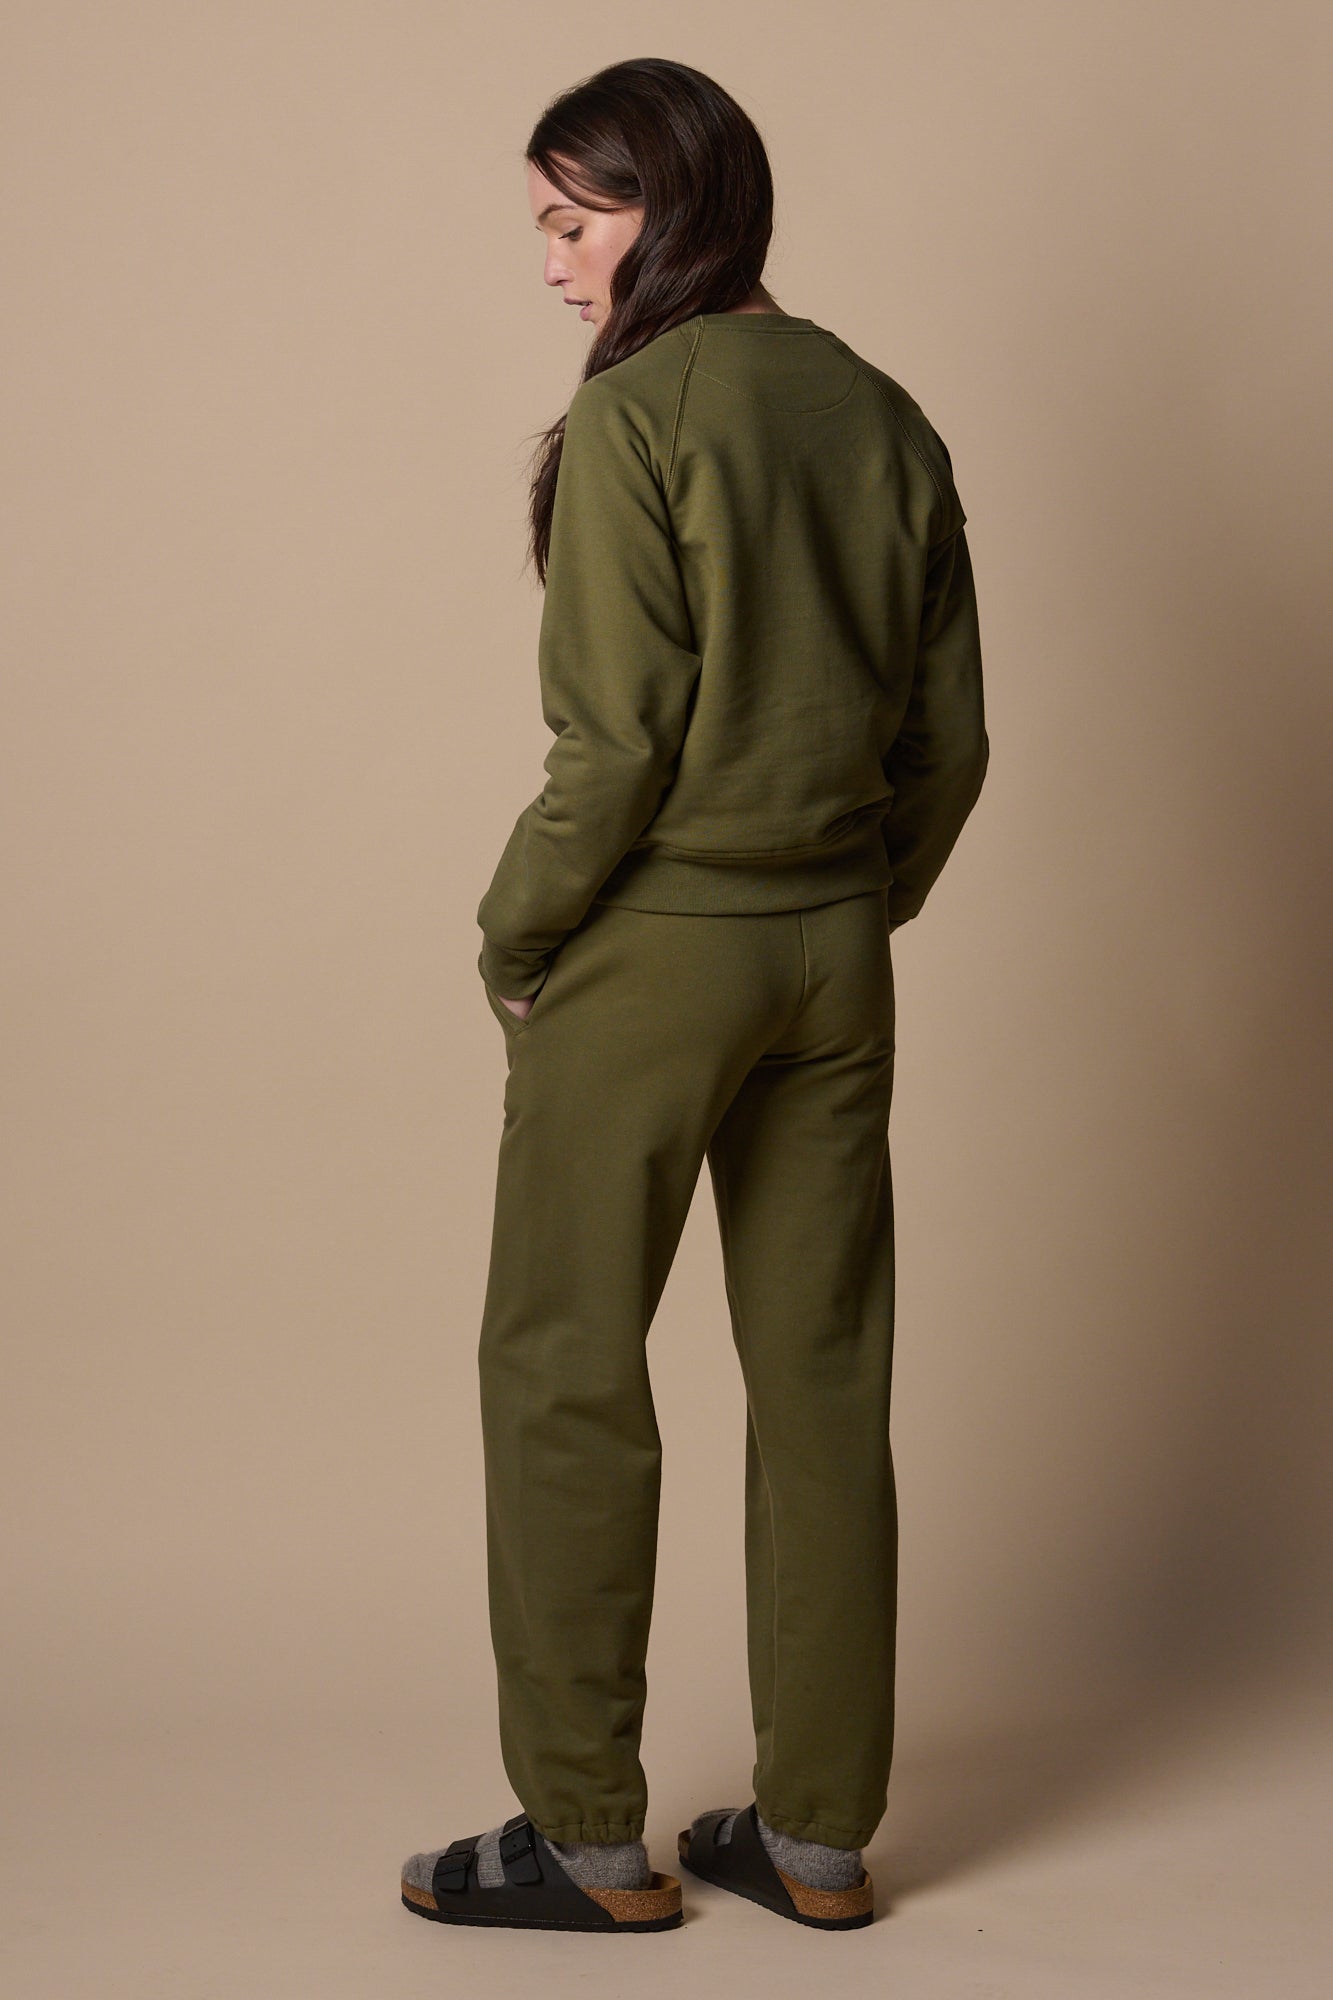 Women's Sweatpants - Bottle Green - Community Clothing